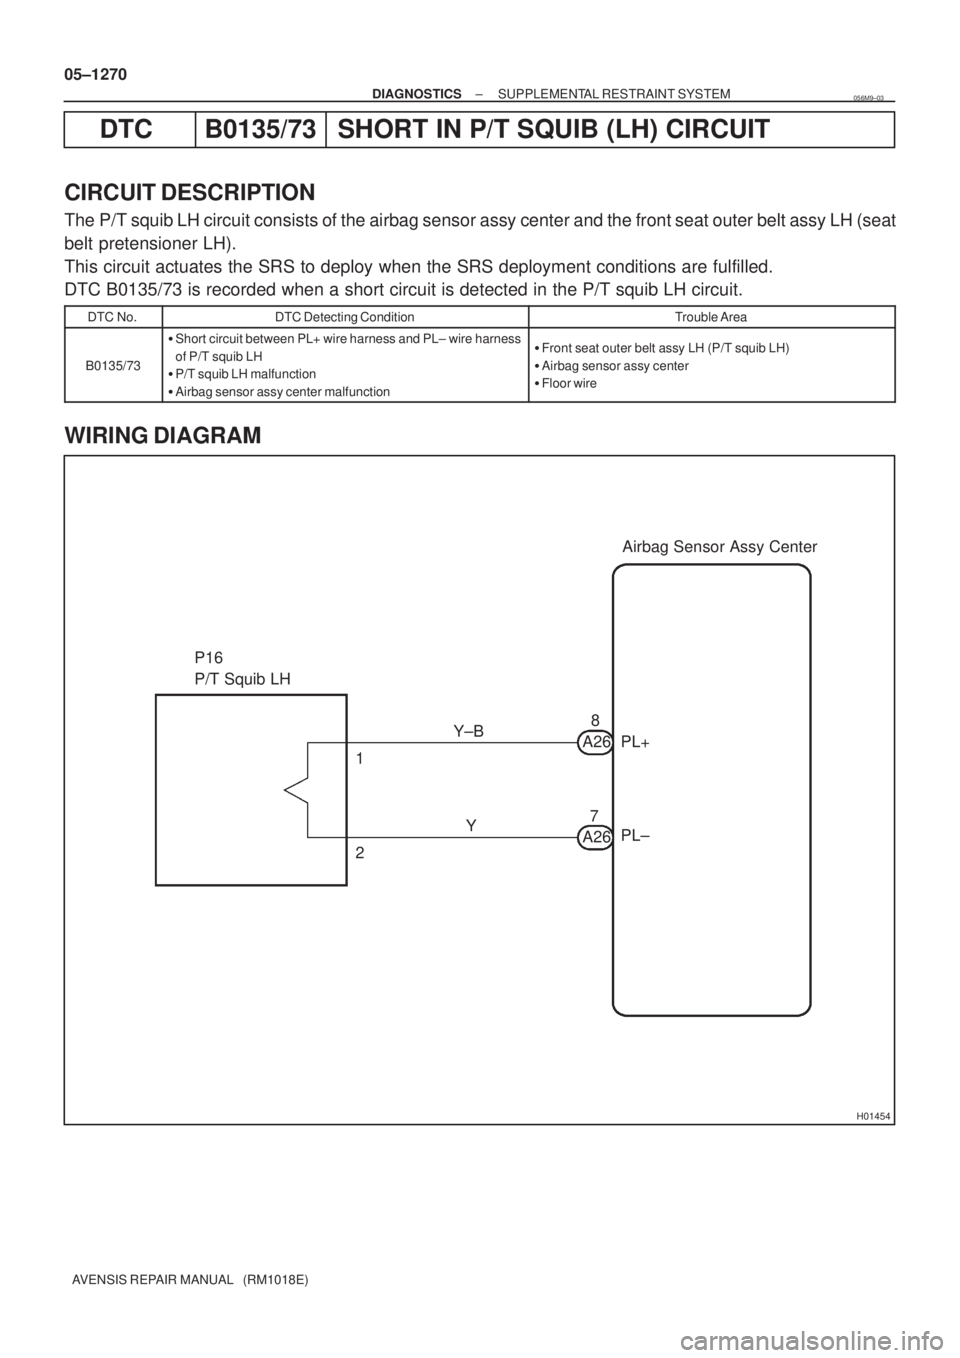 TOYOTA AVENSIS 2005  Service Repair Manual H01454
Airbag Sensor Assy Center
P16
P/T Squib LH
A26 PL+ Y±B
A26PL± Y 1
28
7 05±1270
± DIAGNOSTICSSUPPLEMENTAL RESTRAINT SYSTEM
AVENSIS REPAIR MANUAL   (RM1018E)
DTC B0135/73 SHORT IN P/T SQUIB (